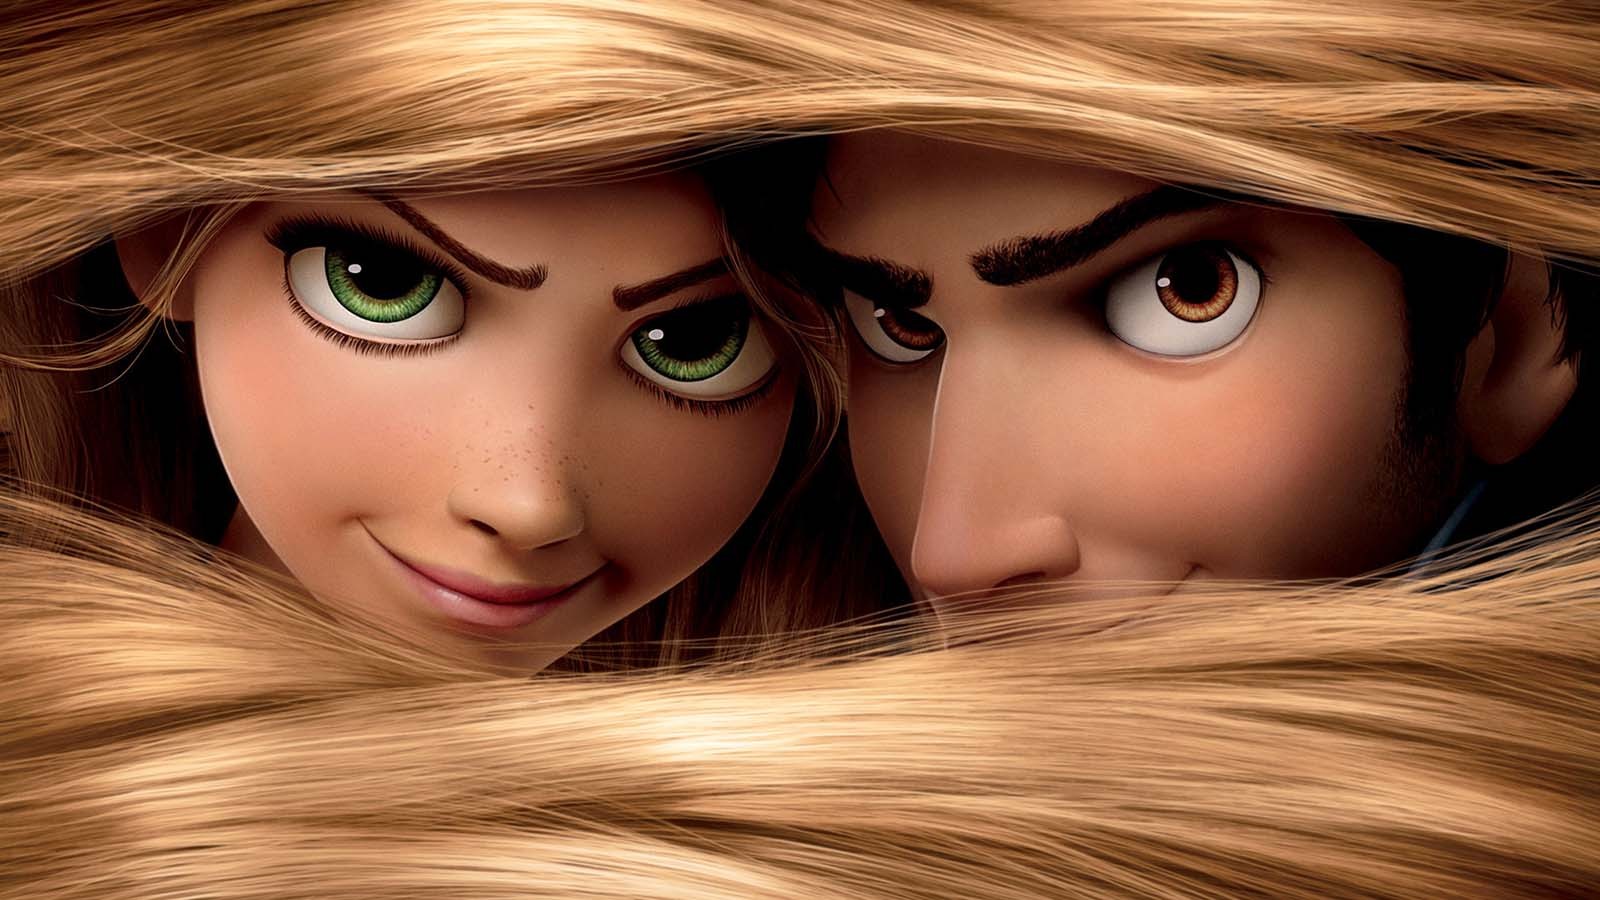 Tangled Green Eyes Movies Animated Movies Disney 2010 Year 1600x900